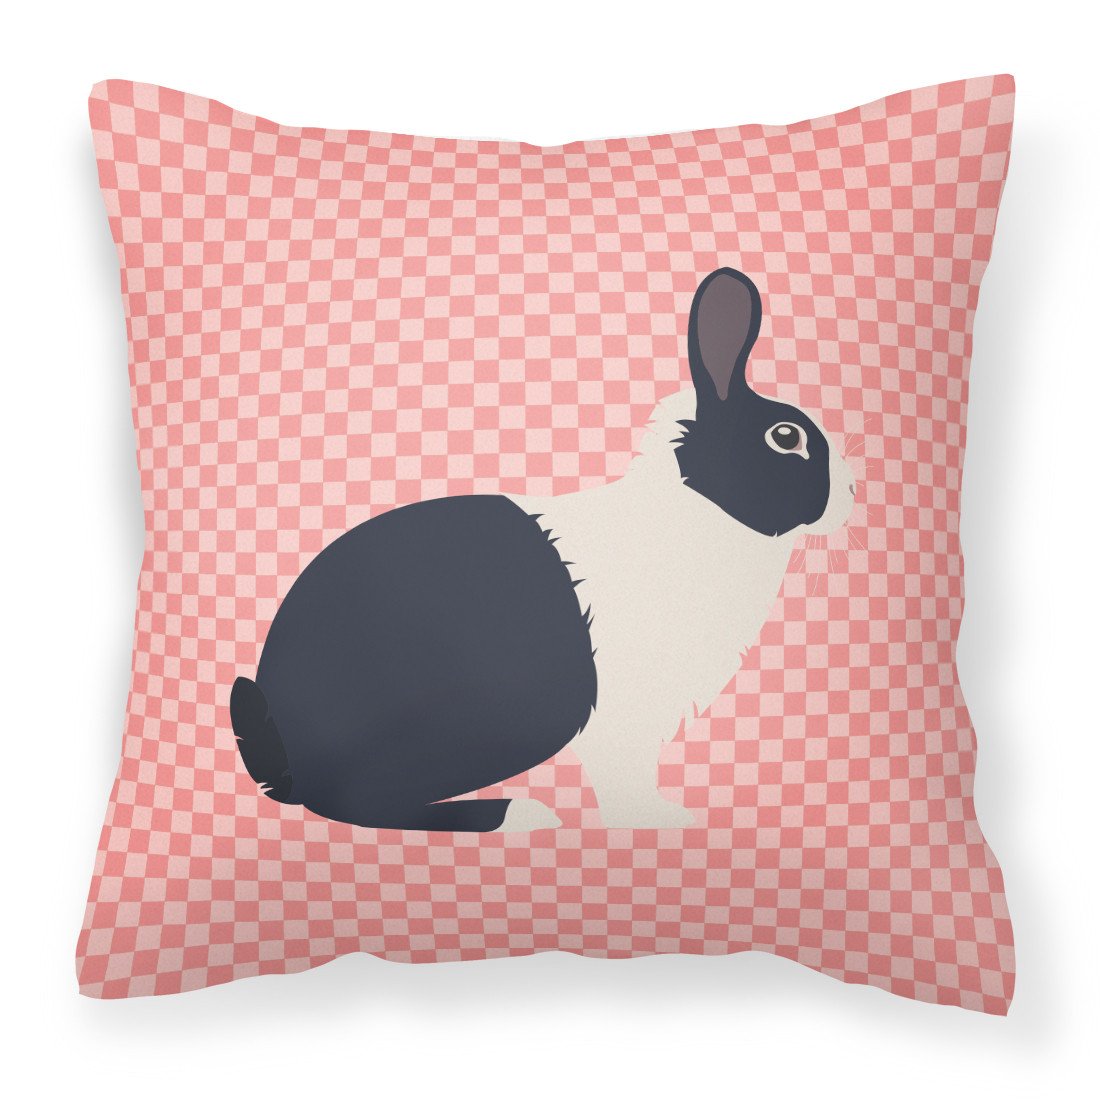 Dutch Rabbit Pink Check Fabric Decorative Pillow BB7958PW1818 by Caroline's Treasures